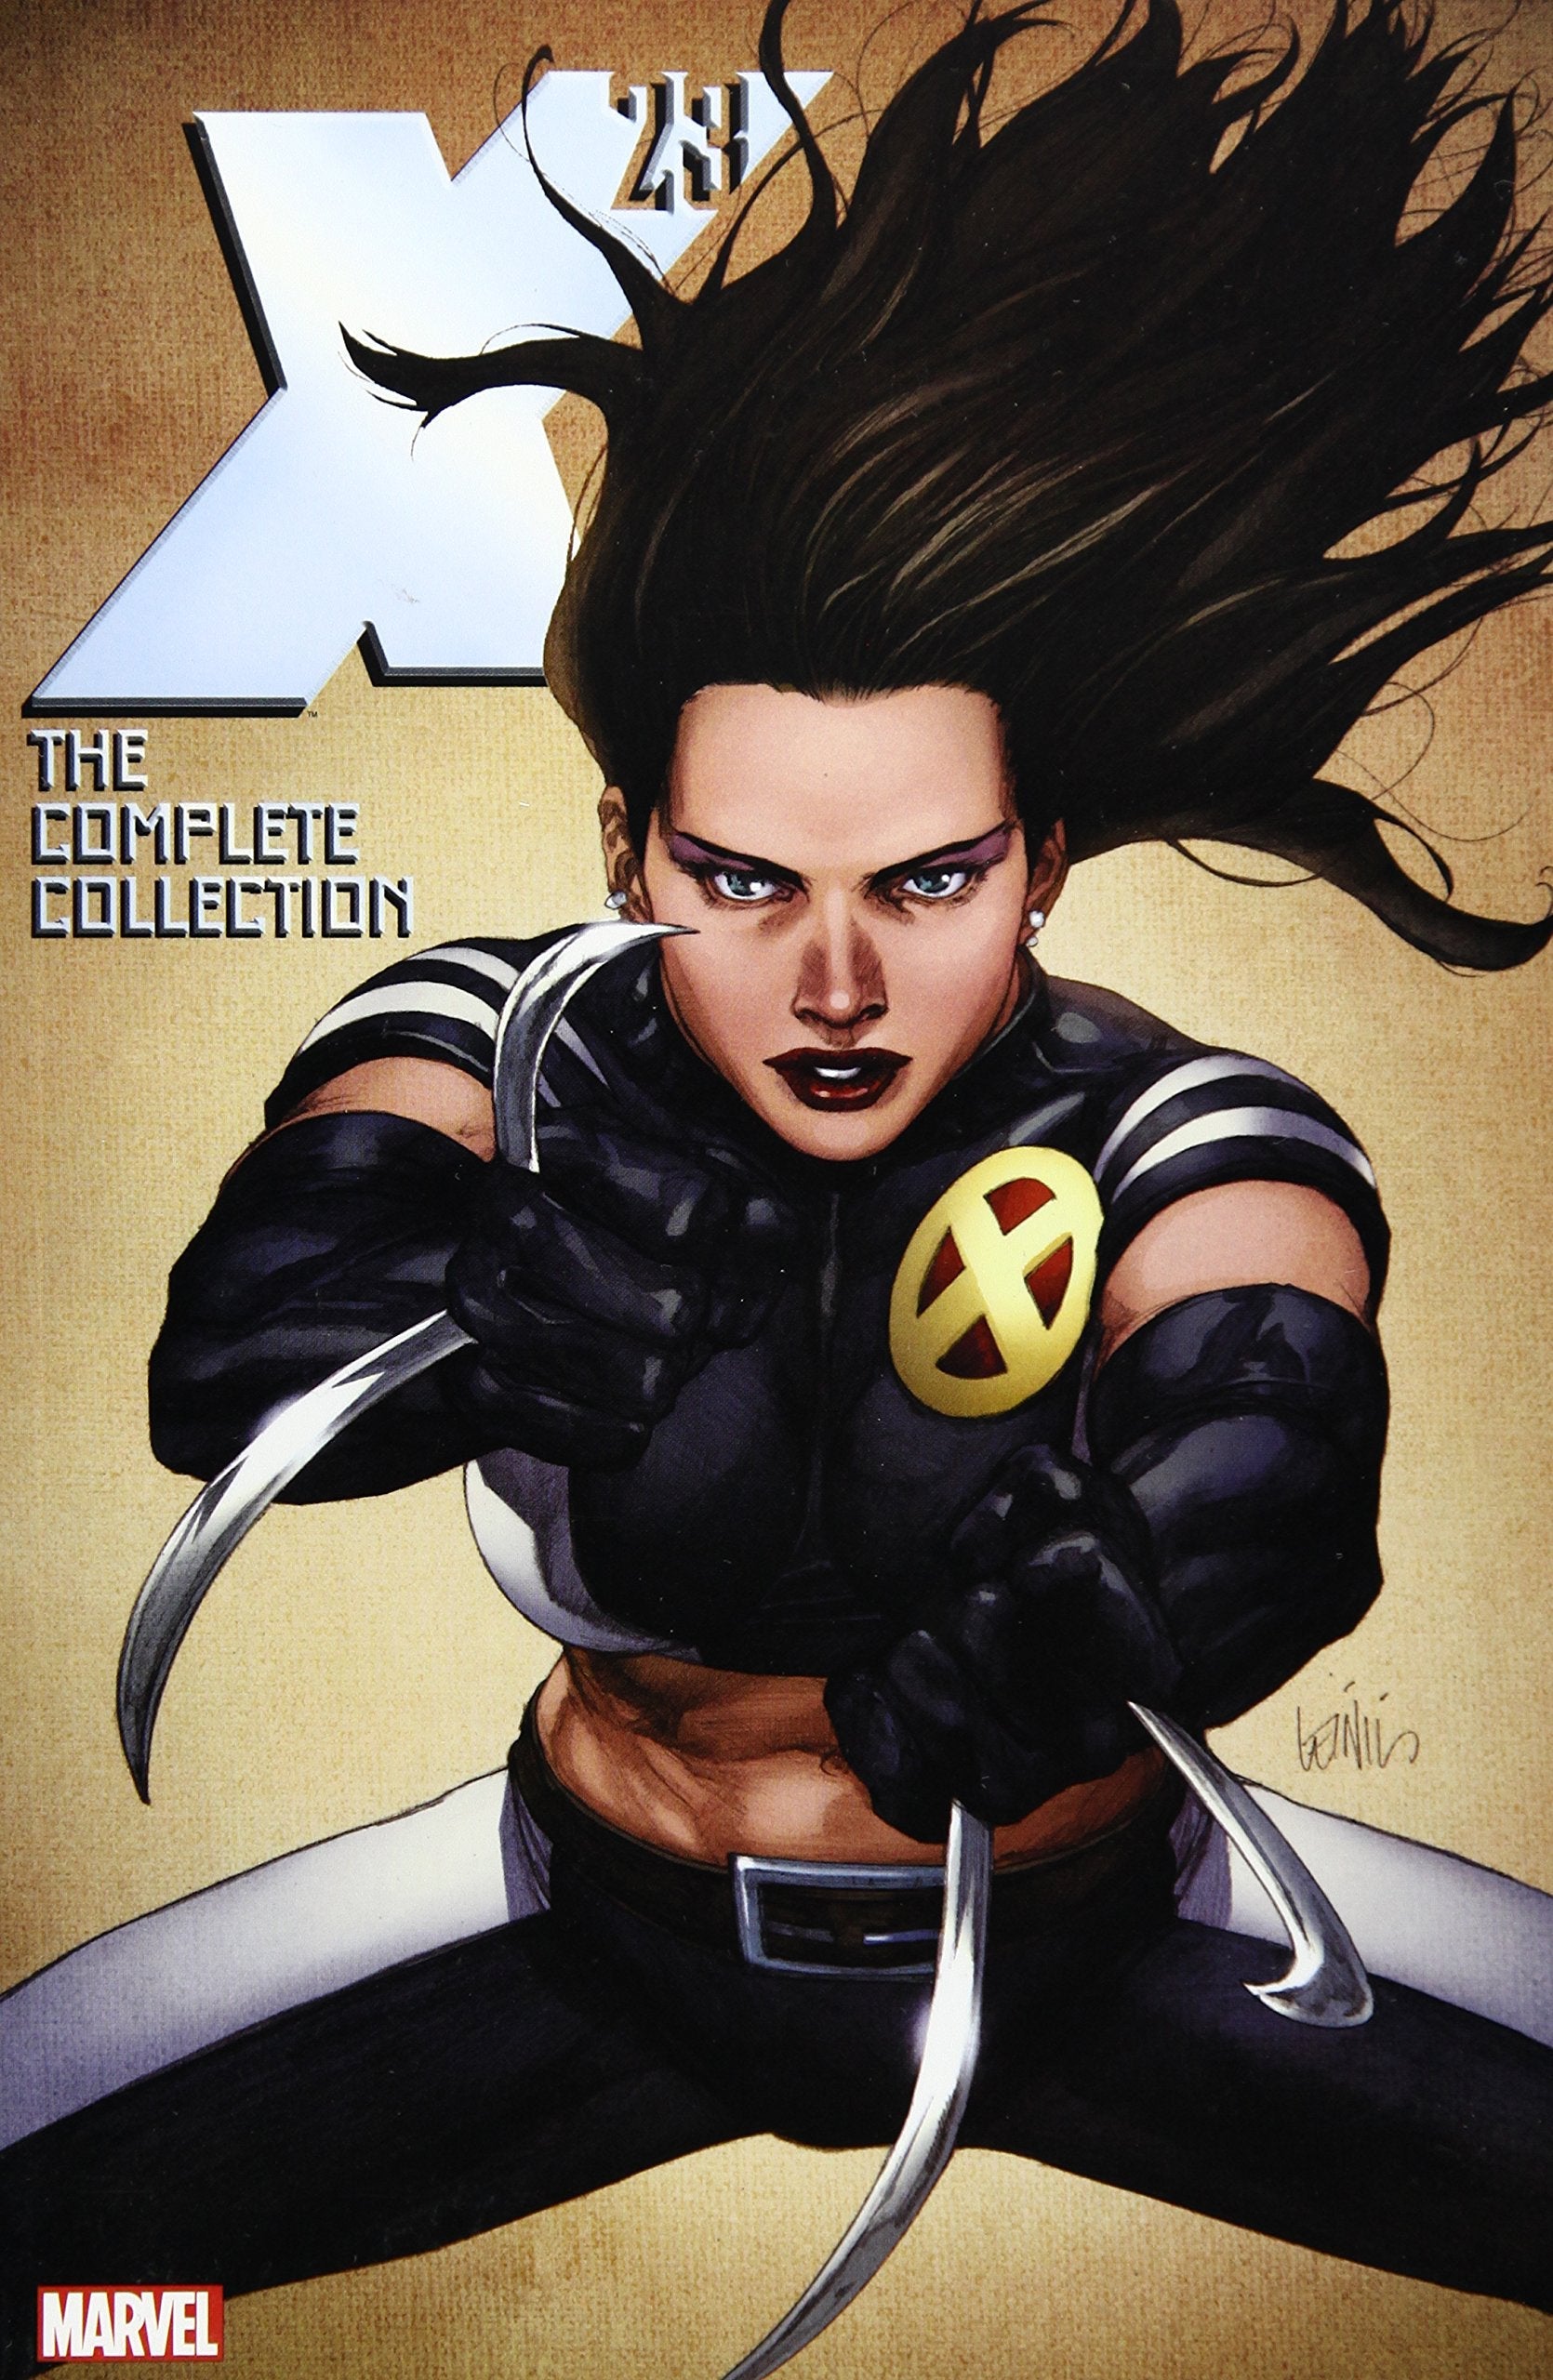 Best X-men Comics, X-23 - The Complete Collection Vol. 2, marvel comics, marvel graphic novels - Best Books